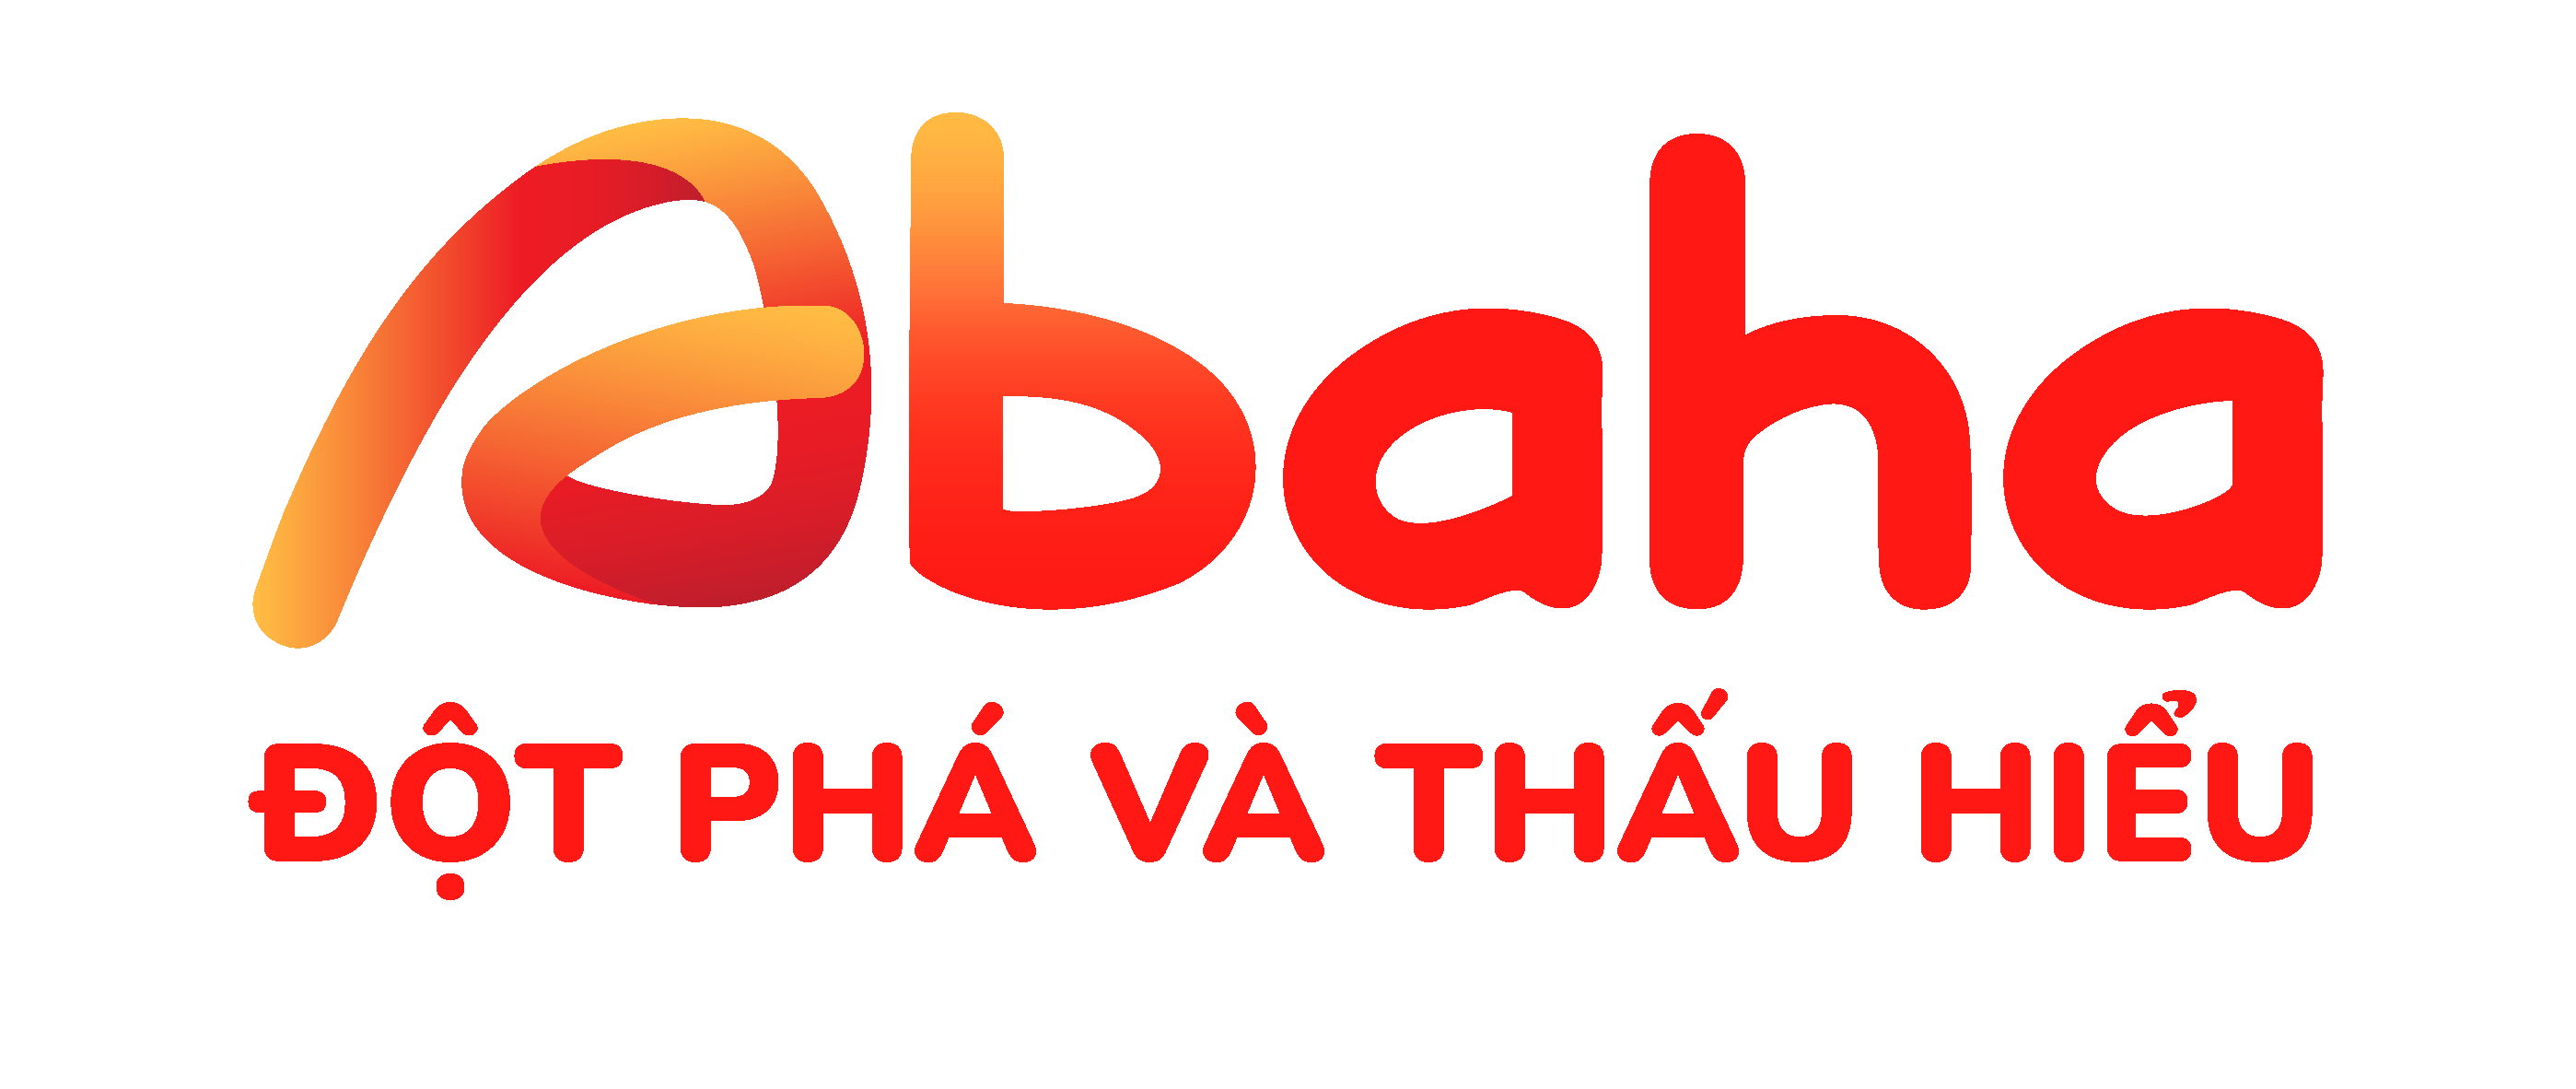 Webinar - Big Data cho chuỗi bán lẻ abaha logo